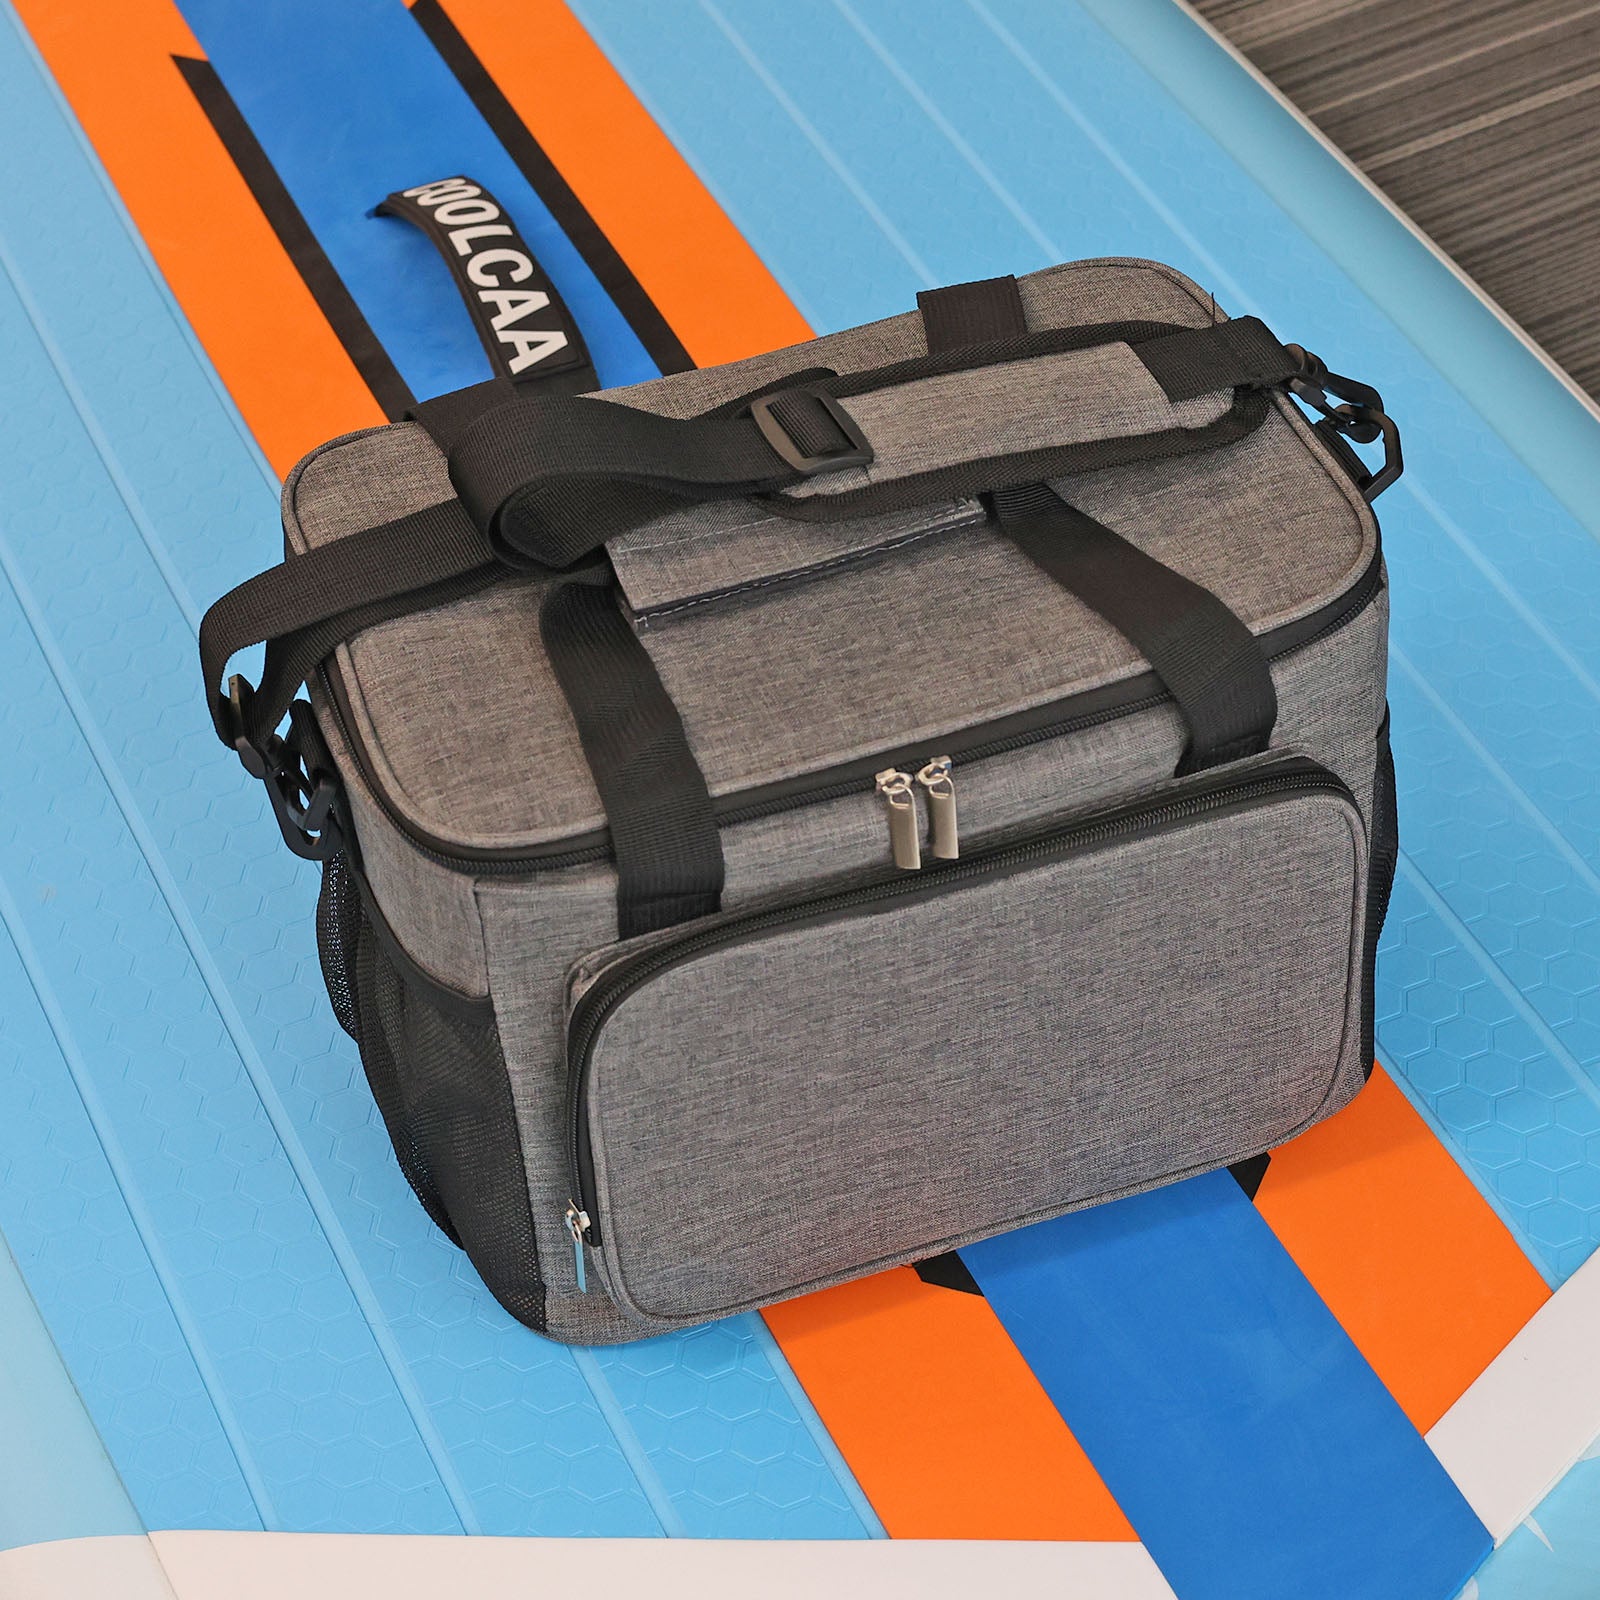 Paddleboard Accessories Cooler & Deck Bag